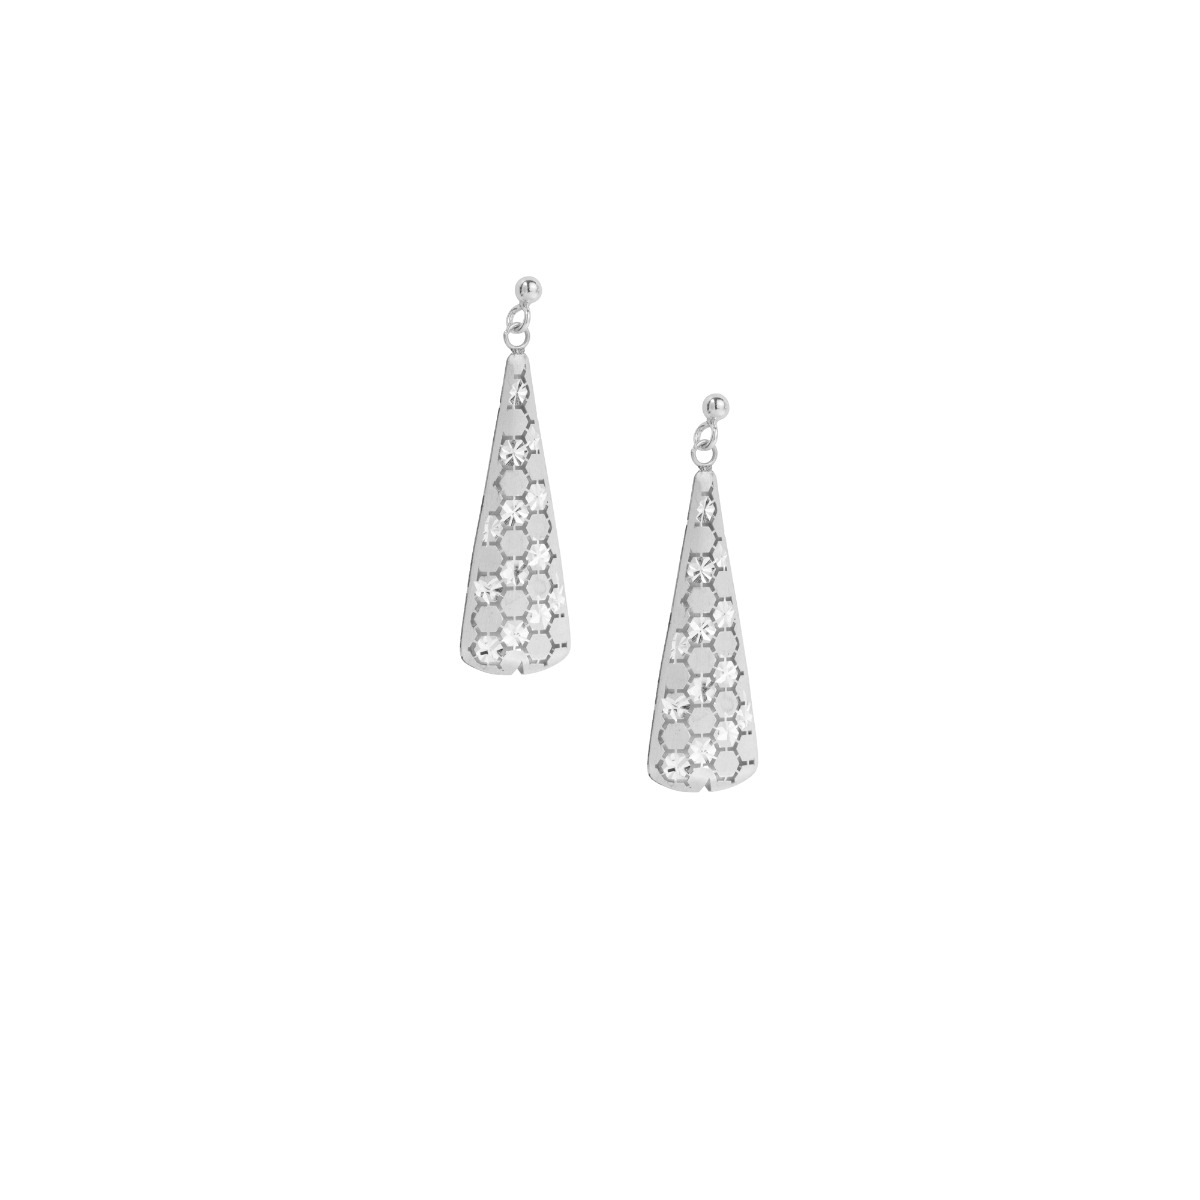 Modern Isosceles Triangle Earrings with Diamond Effect